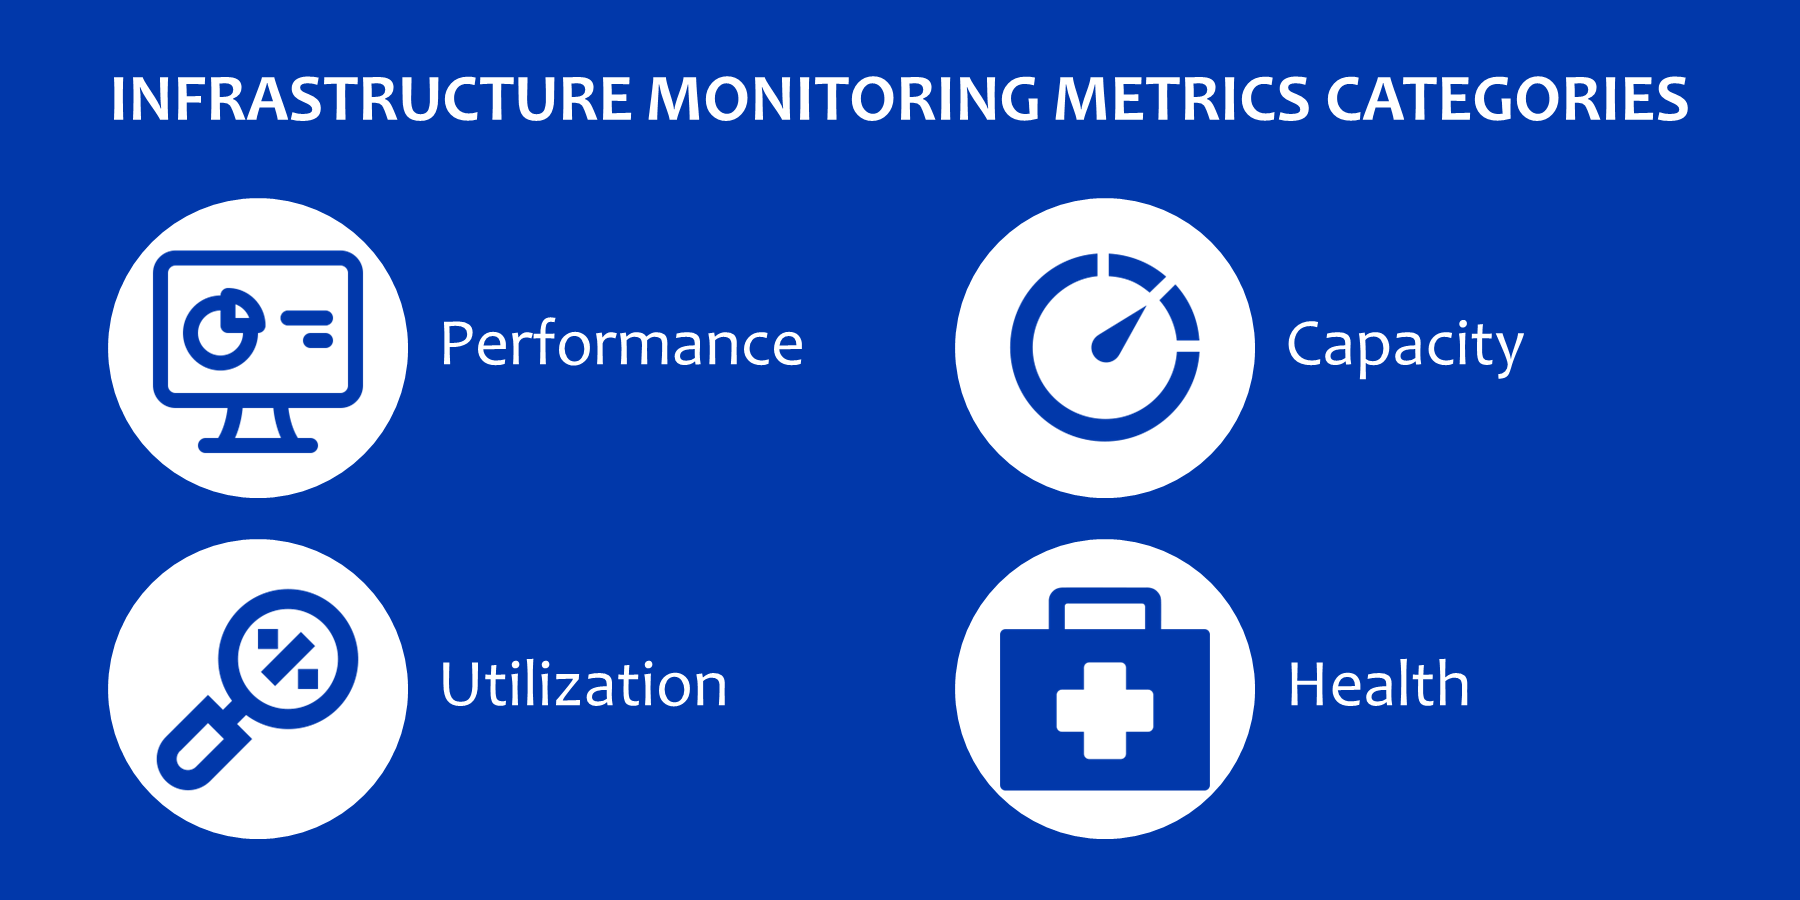 Infrastructure monitoring metrics categories: performance, utilization, capacity, health